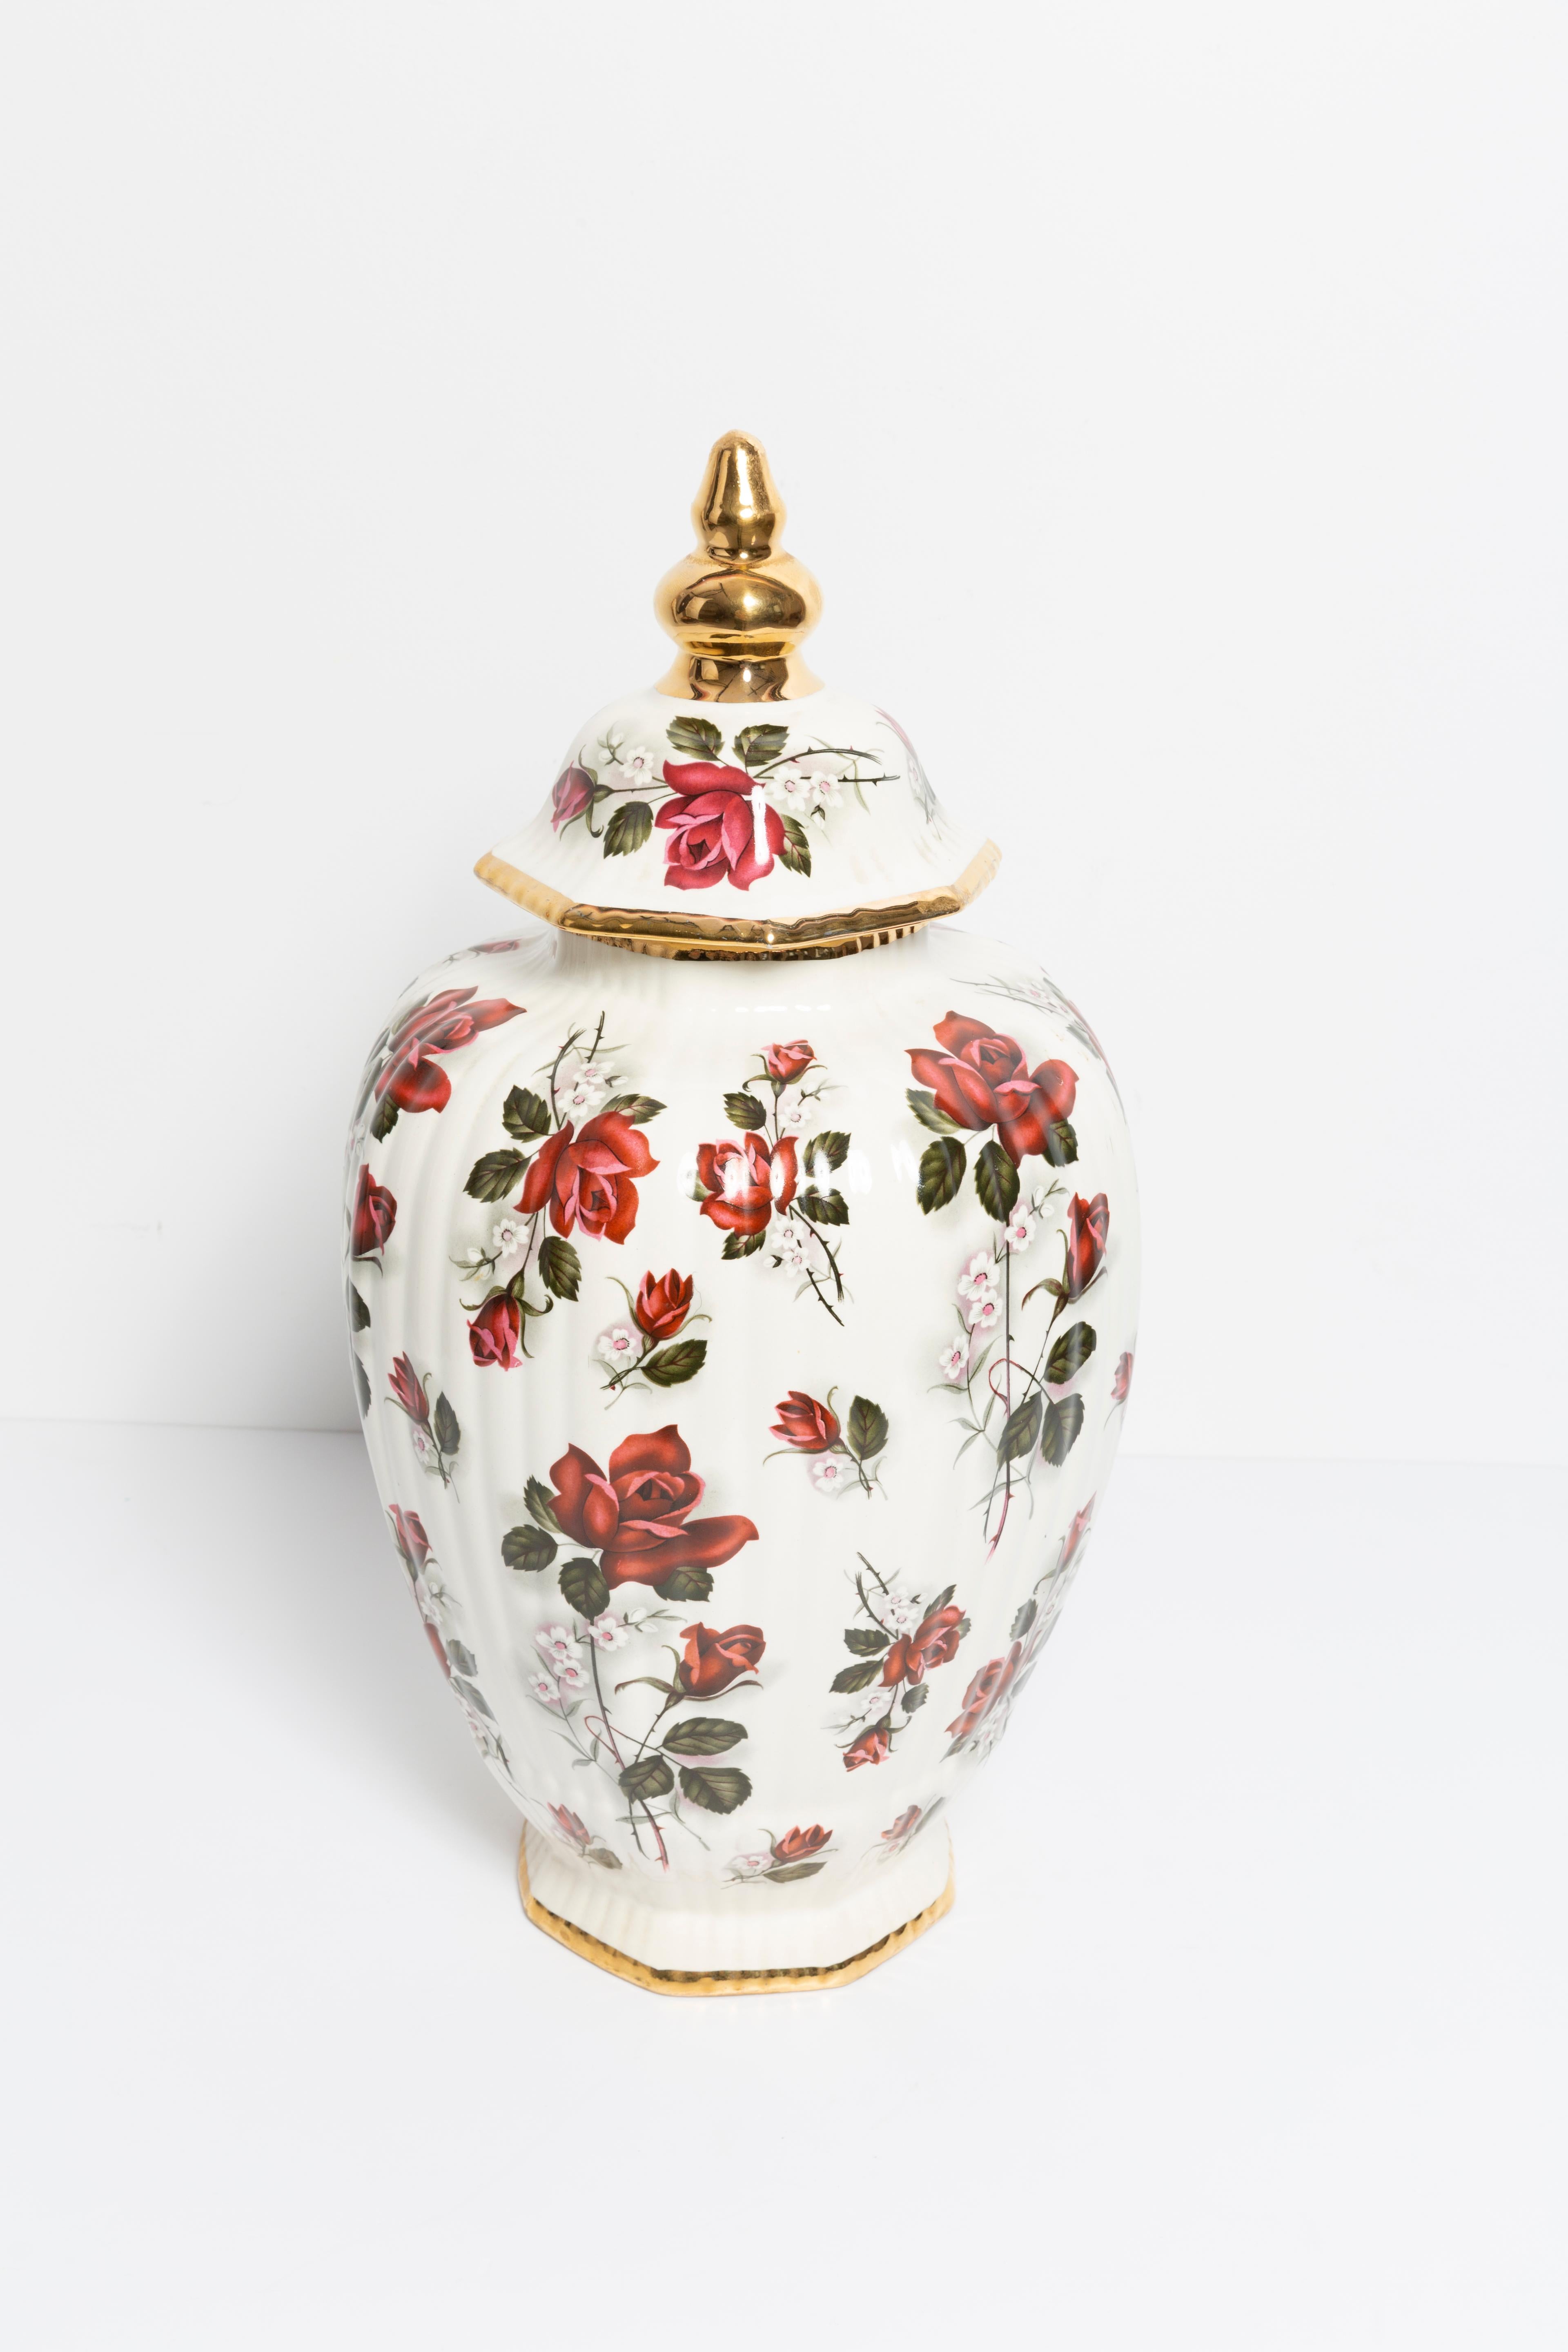 Mid-Century Modern Big Ceramic Hand Painted Roses Vase Candy Box, 20th Century, Belgium, 1960s For Sale